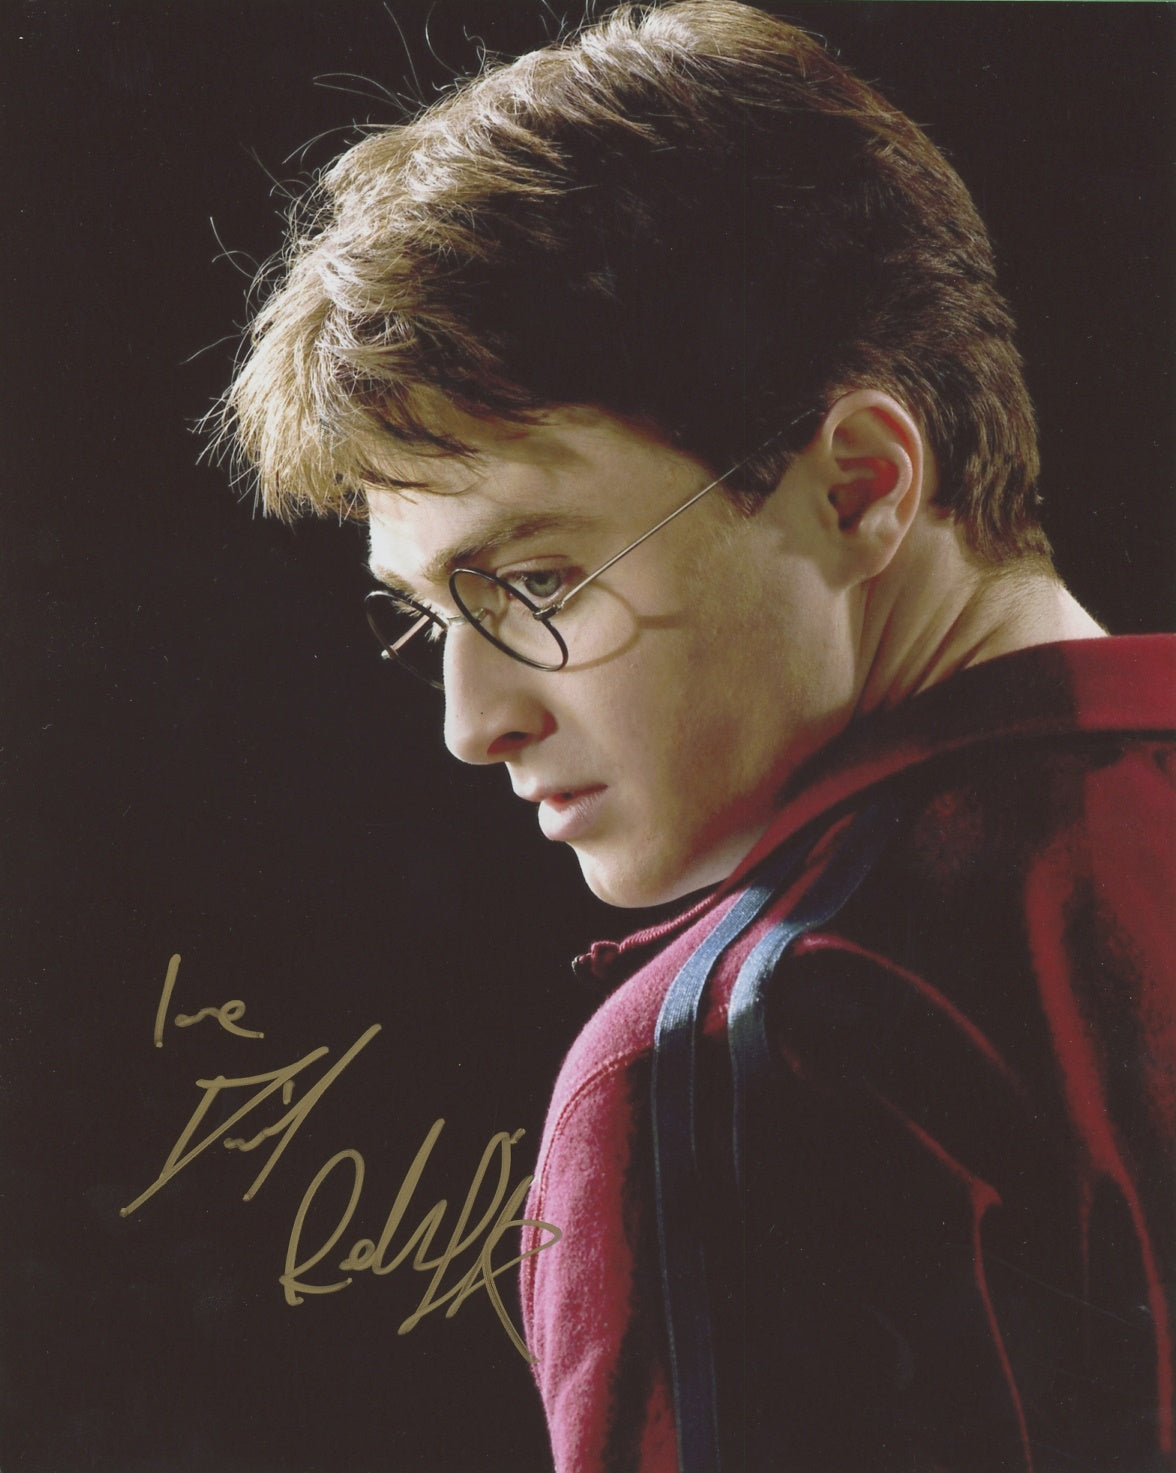 Daniel Radcliffe Signed 8x10 Photo